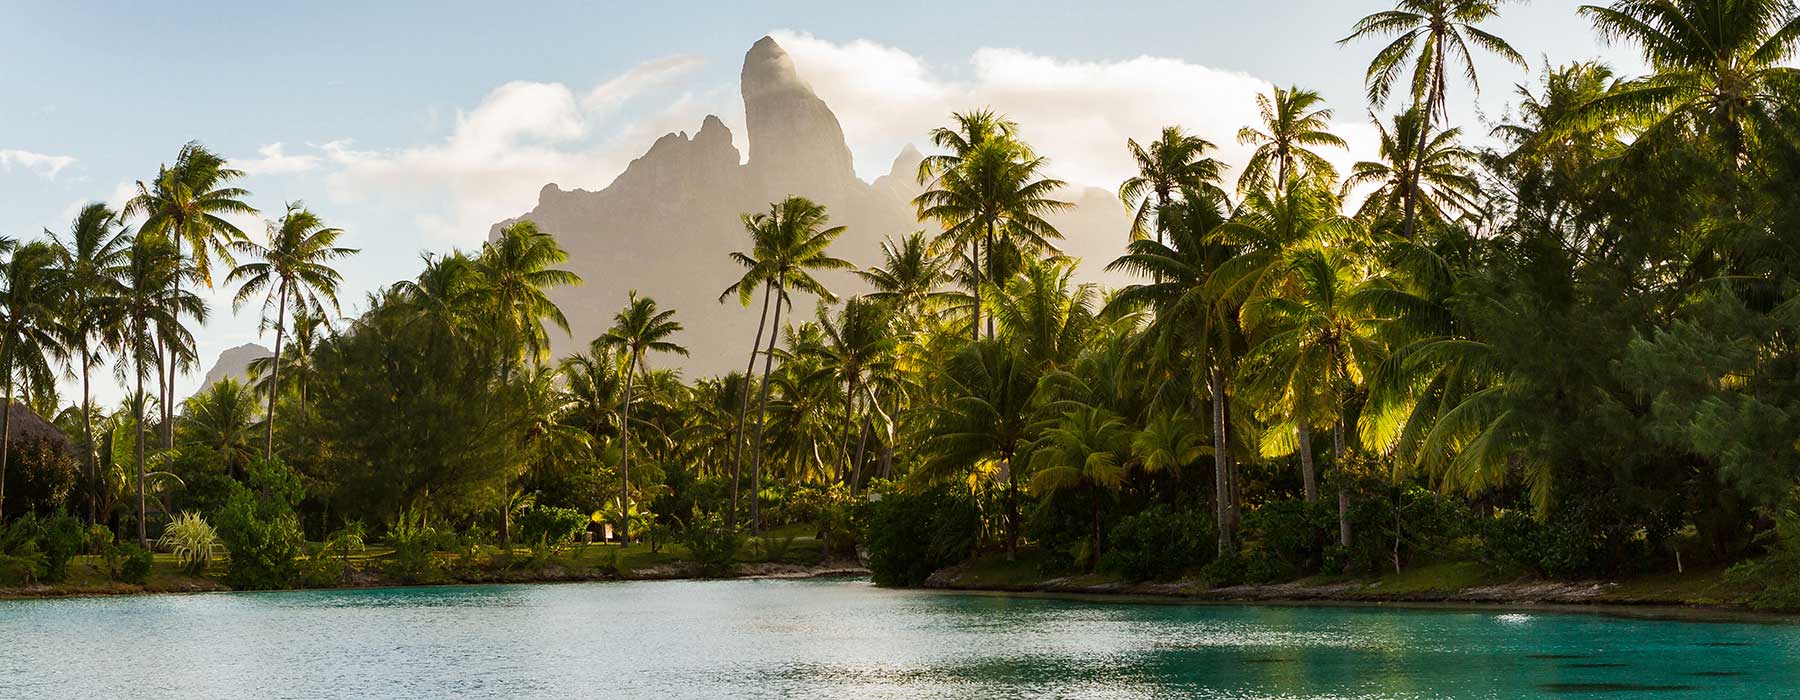 Voyages de luxe Polynésie